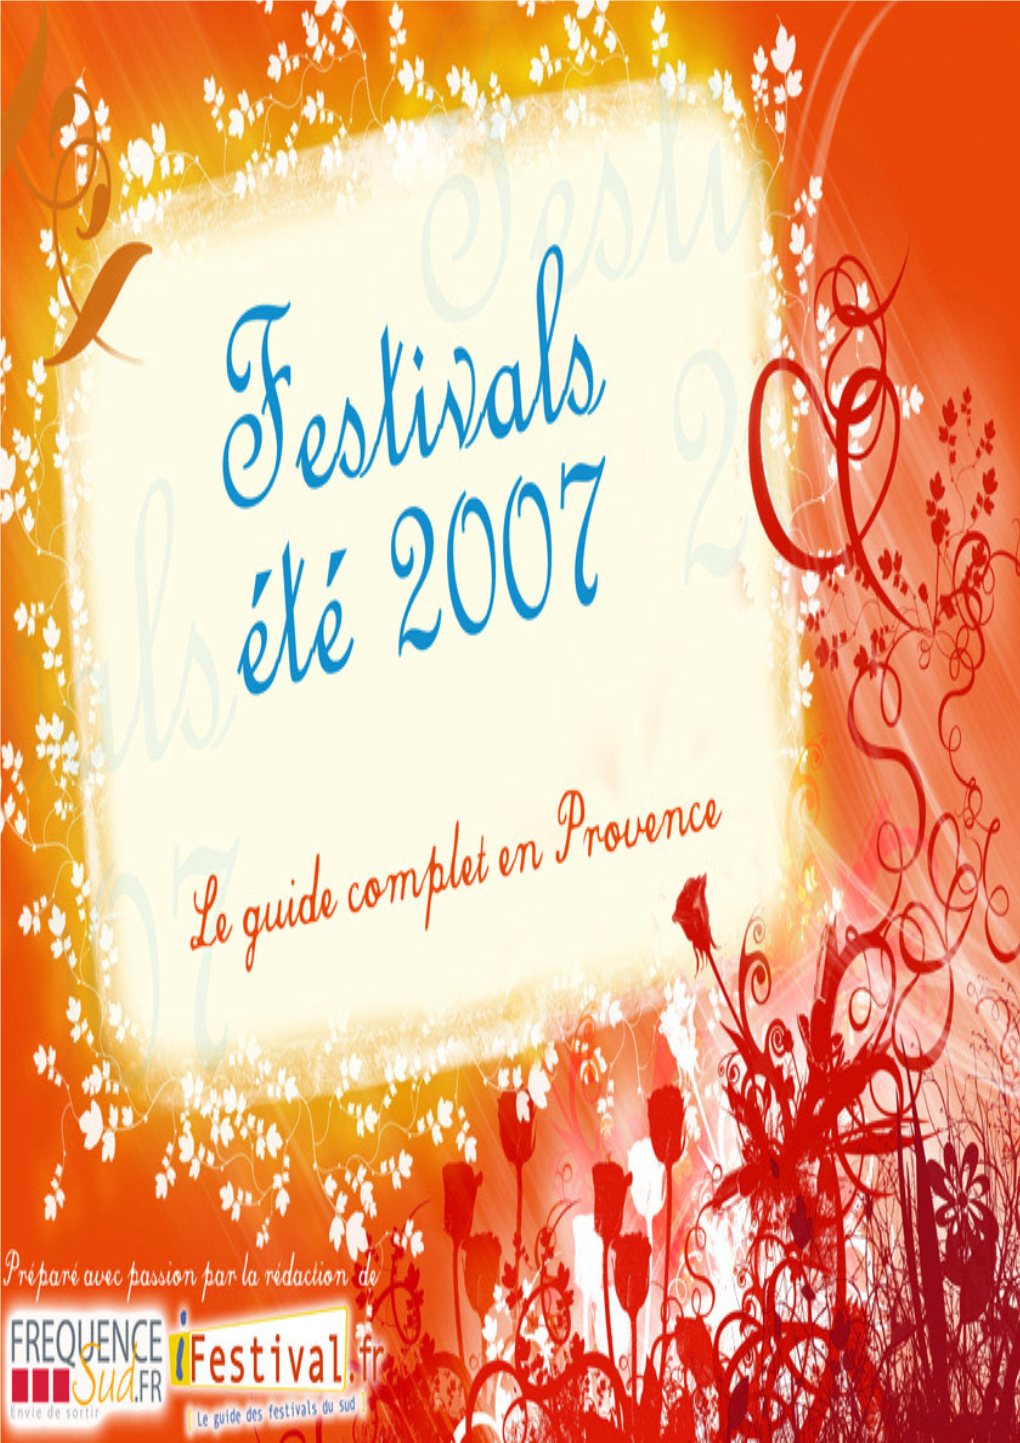 Festival Ete 2007.Pdf